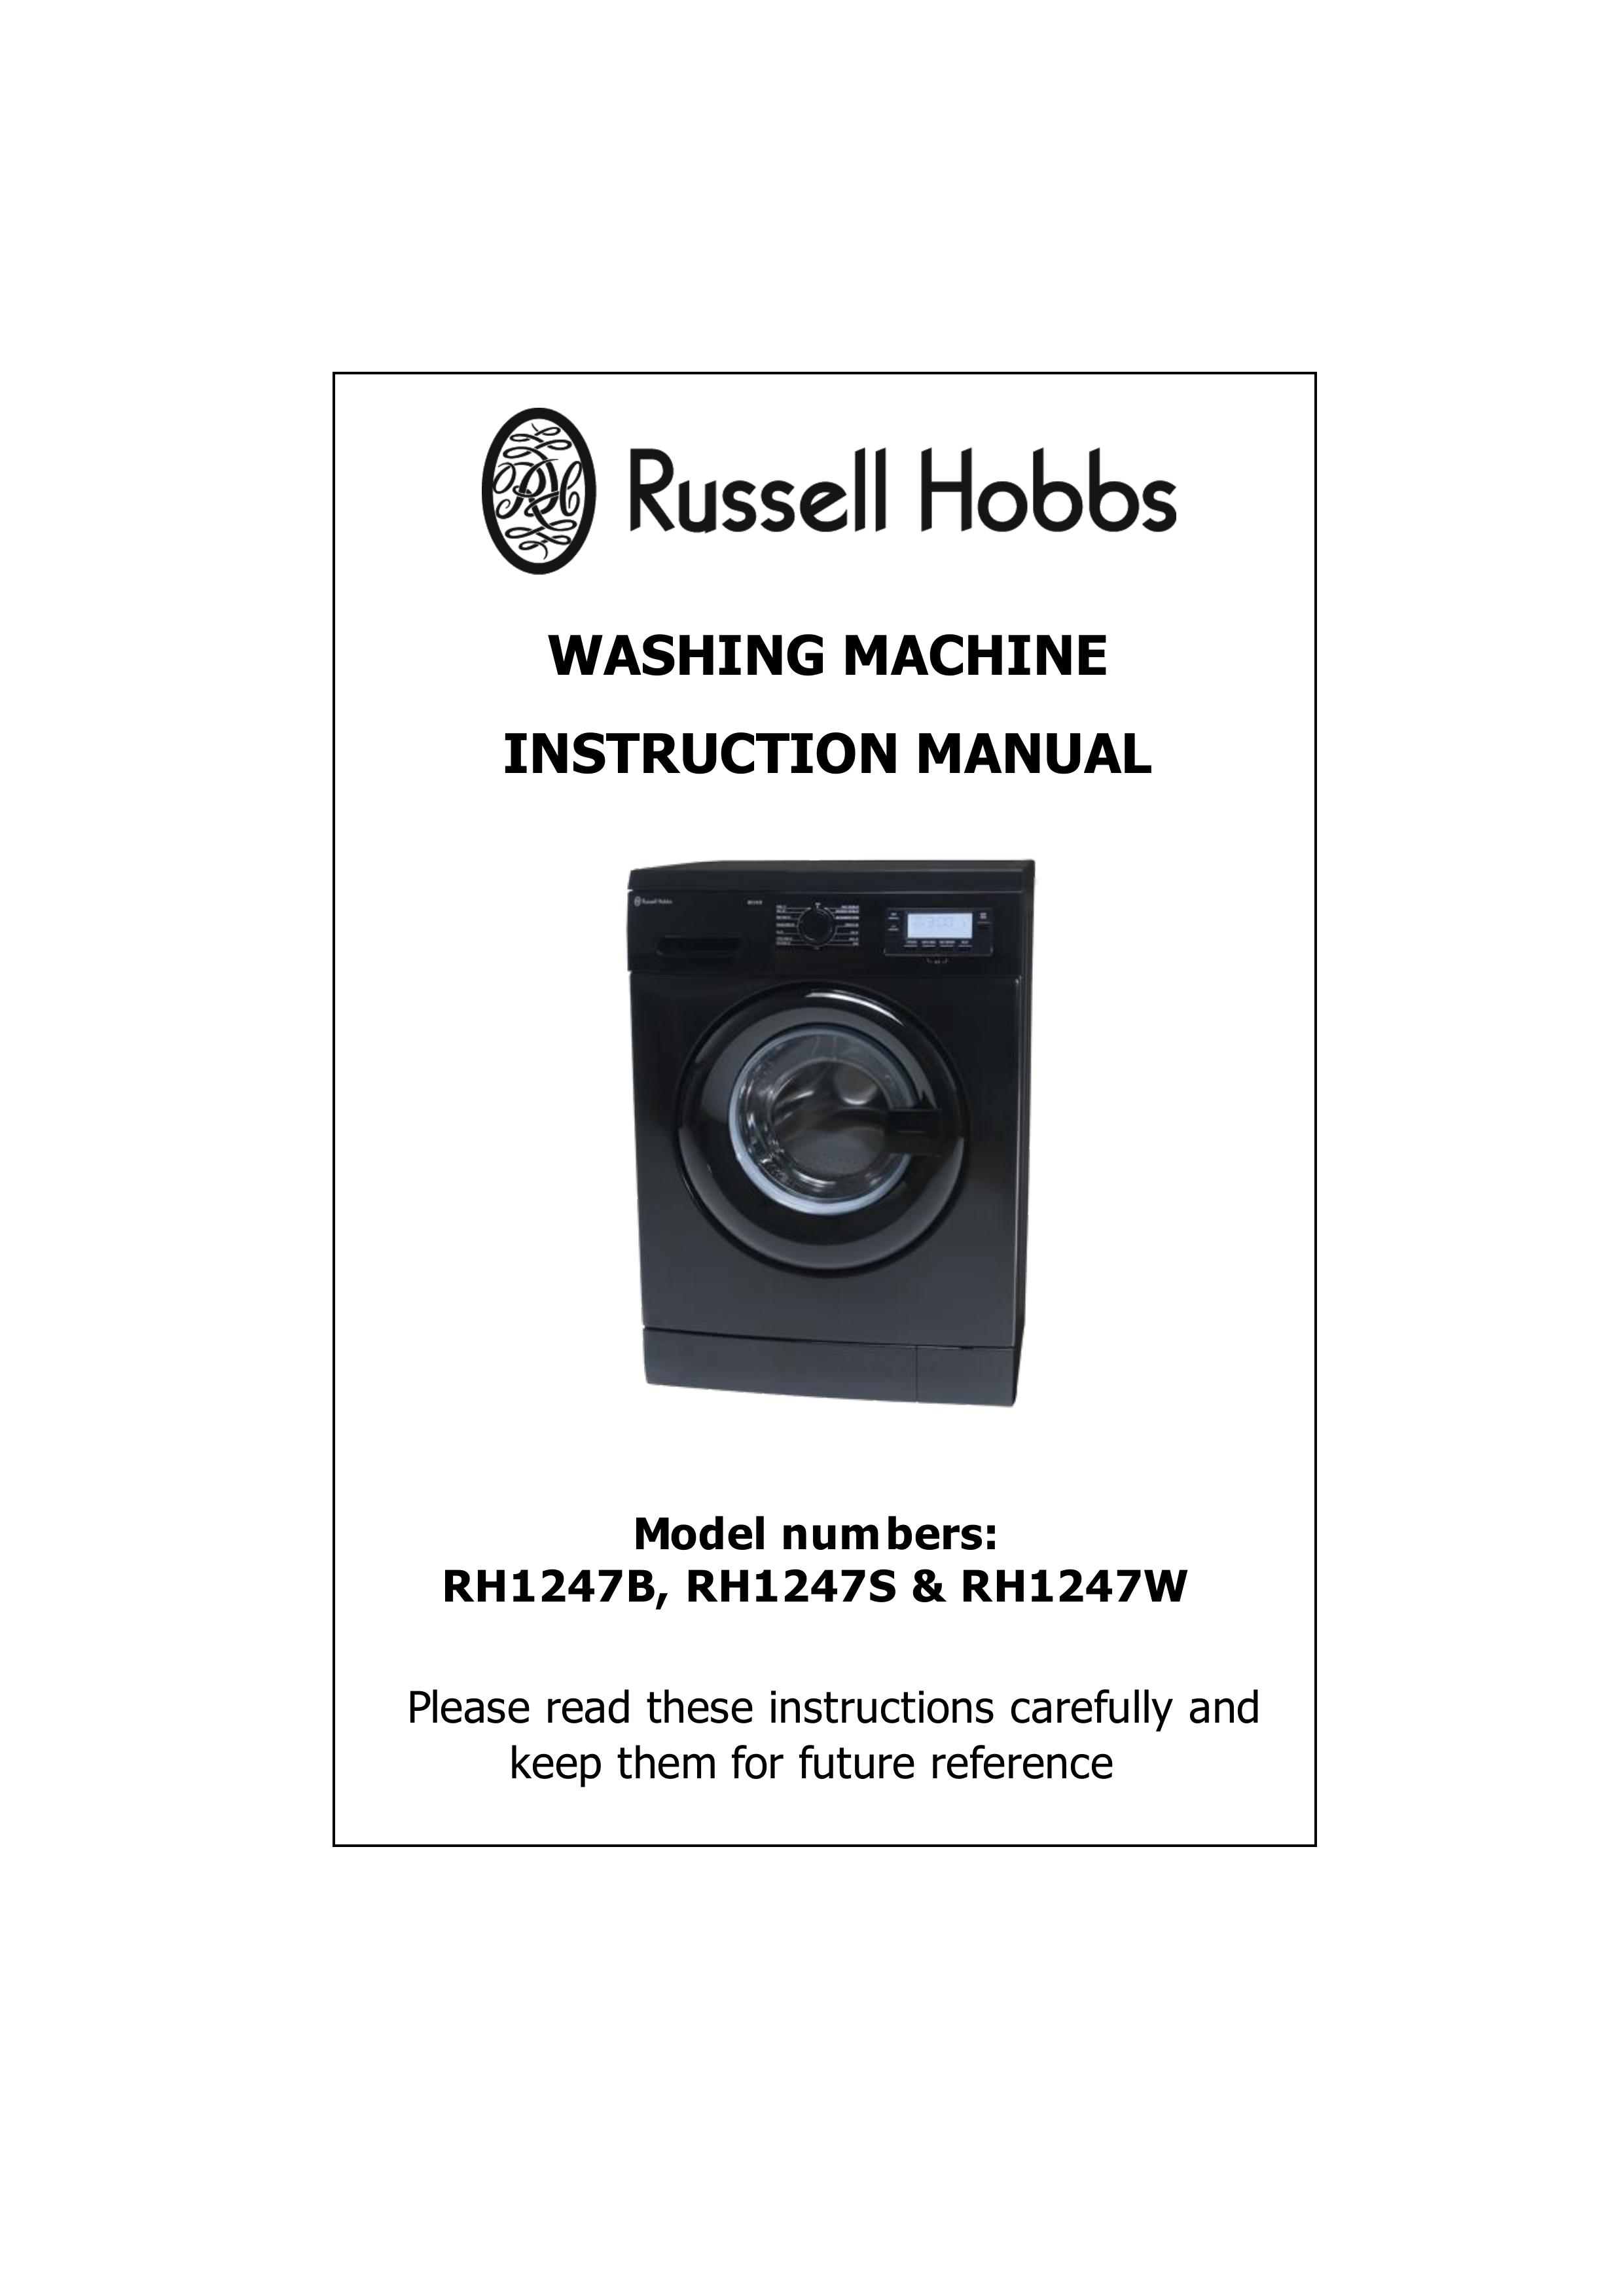 Russell Hobbs RH1247B Washer User Manual